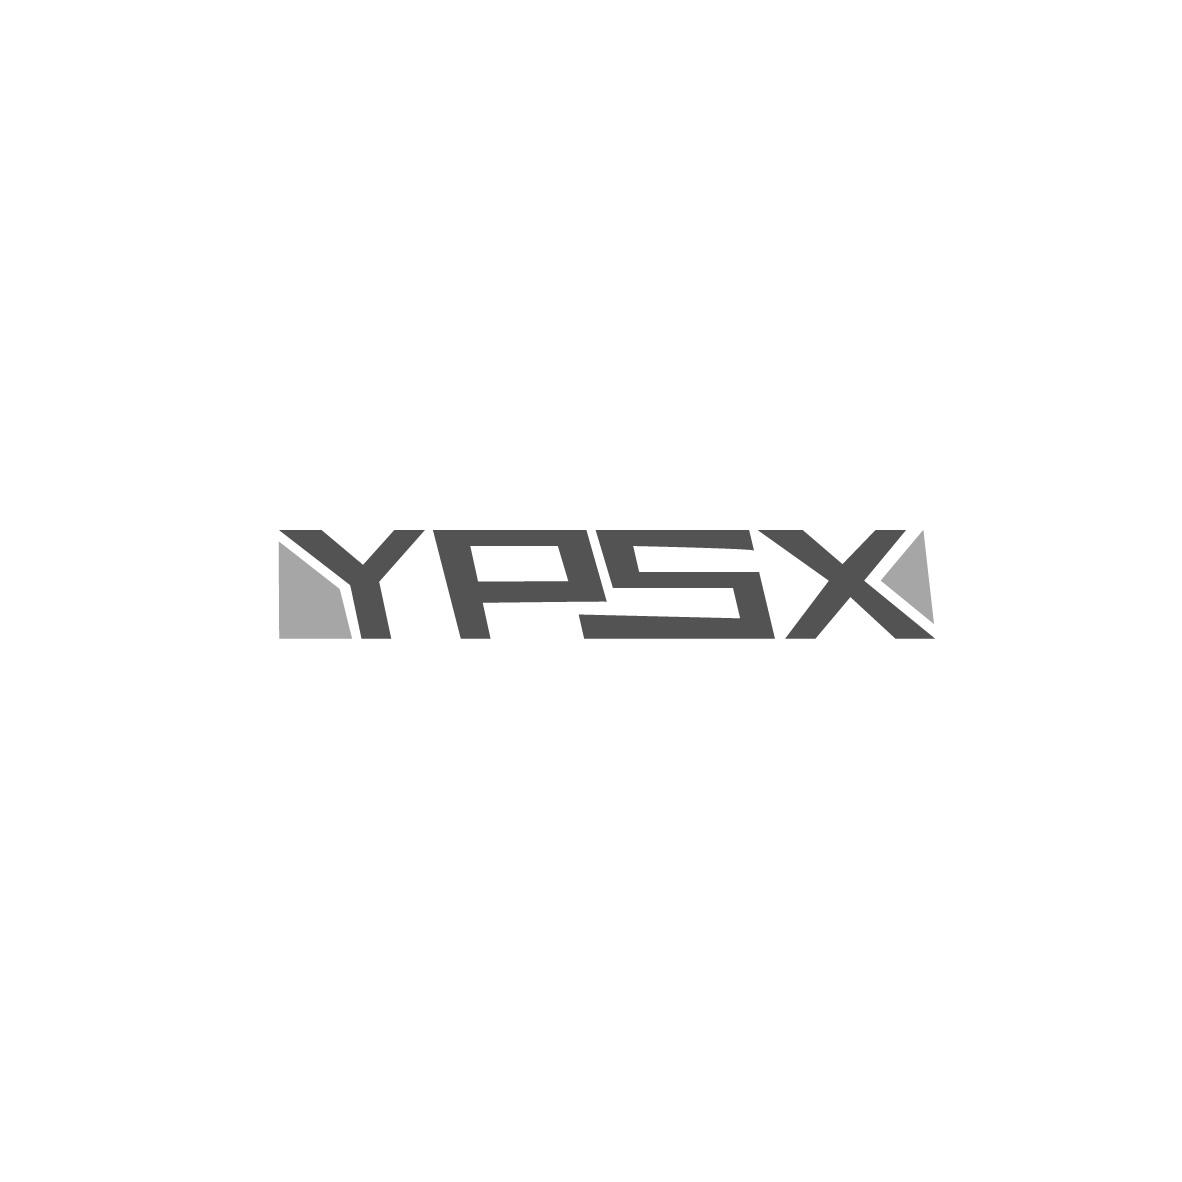 YPSX商标转让